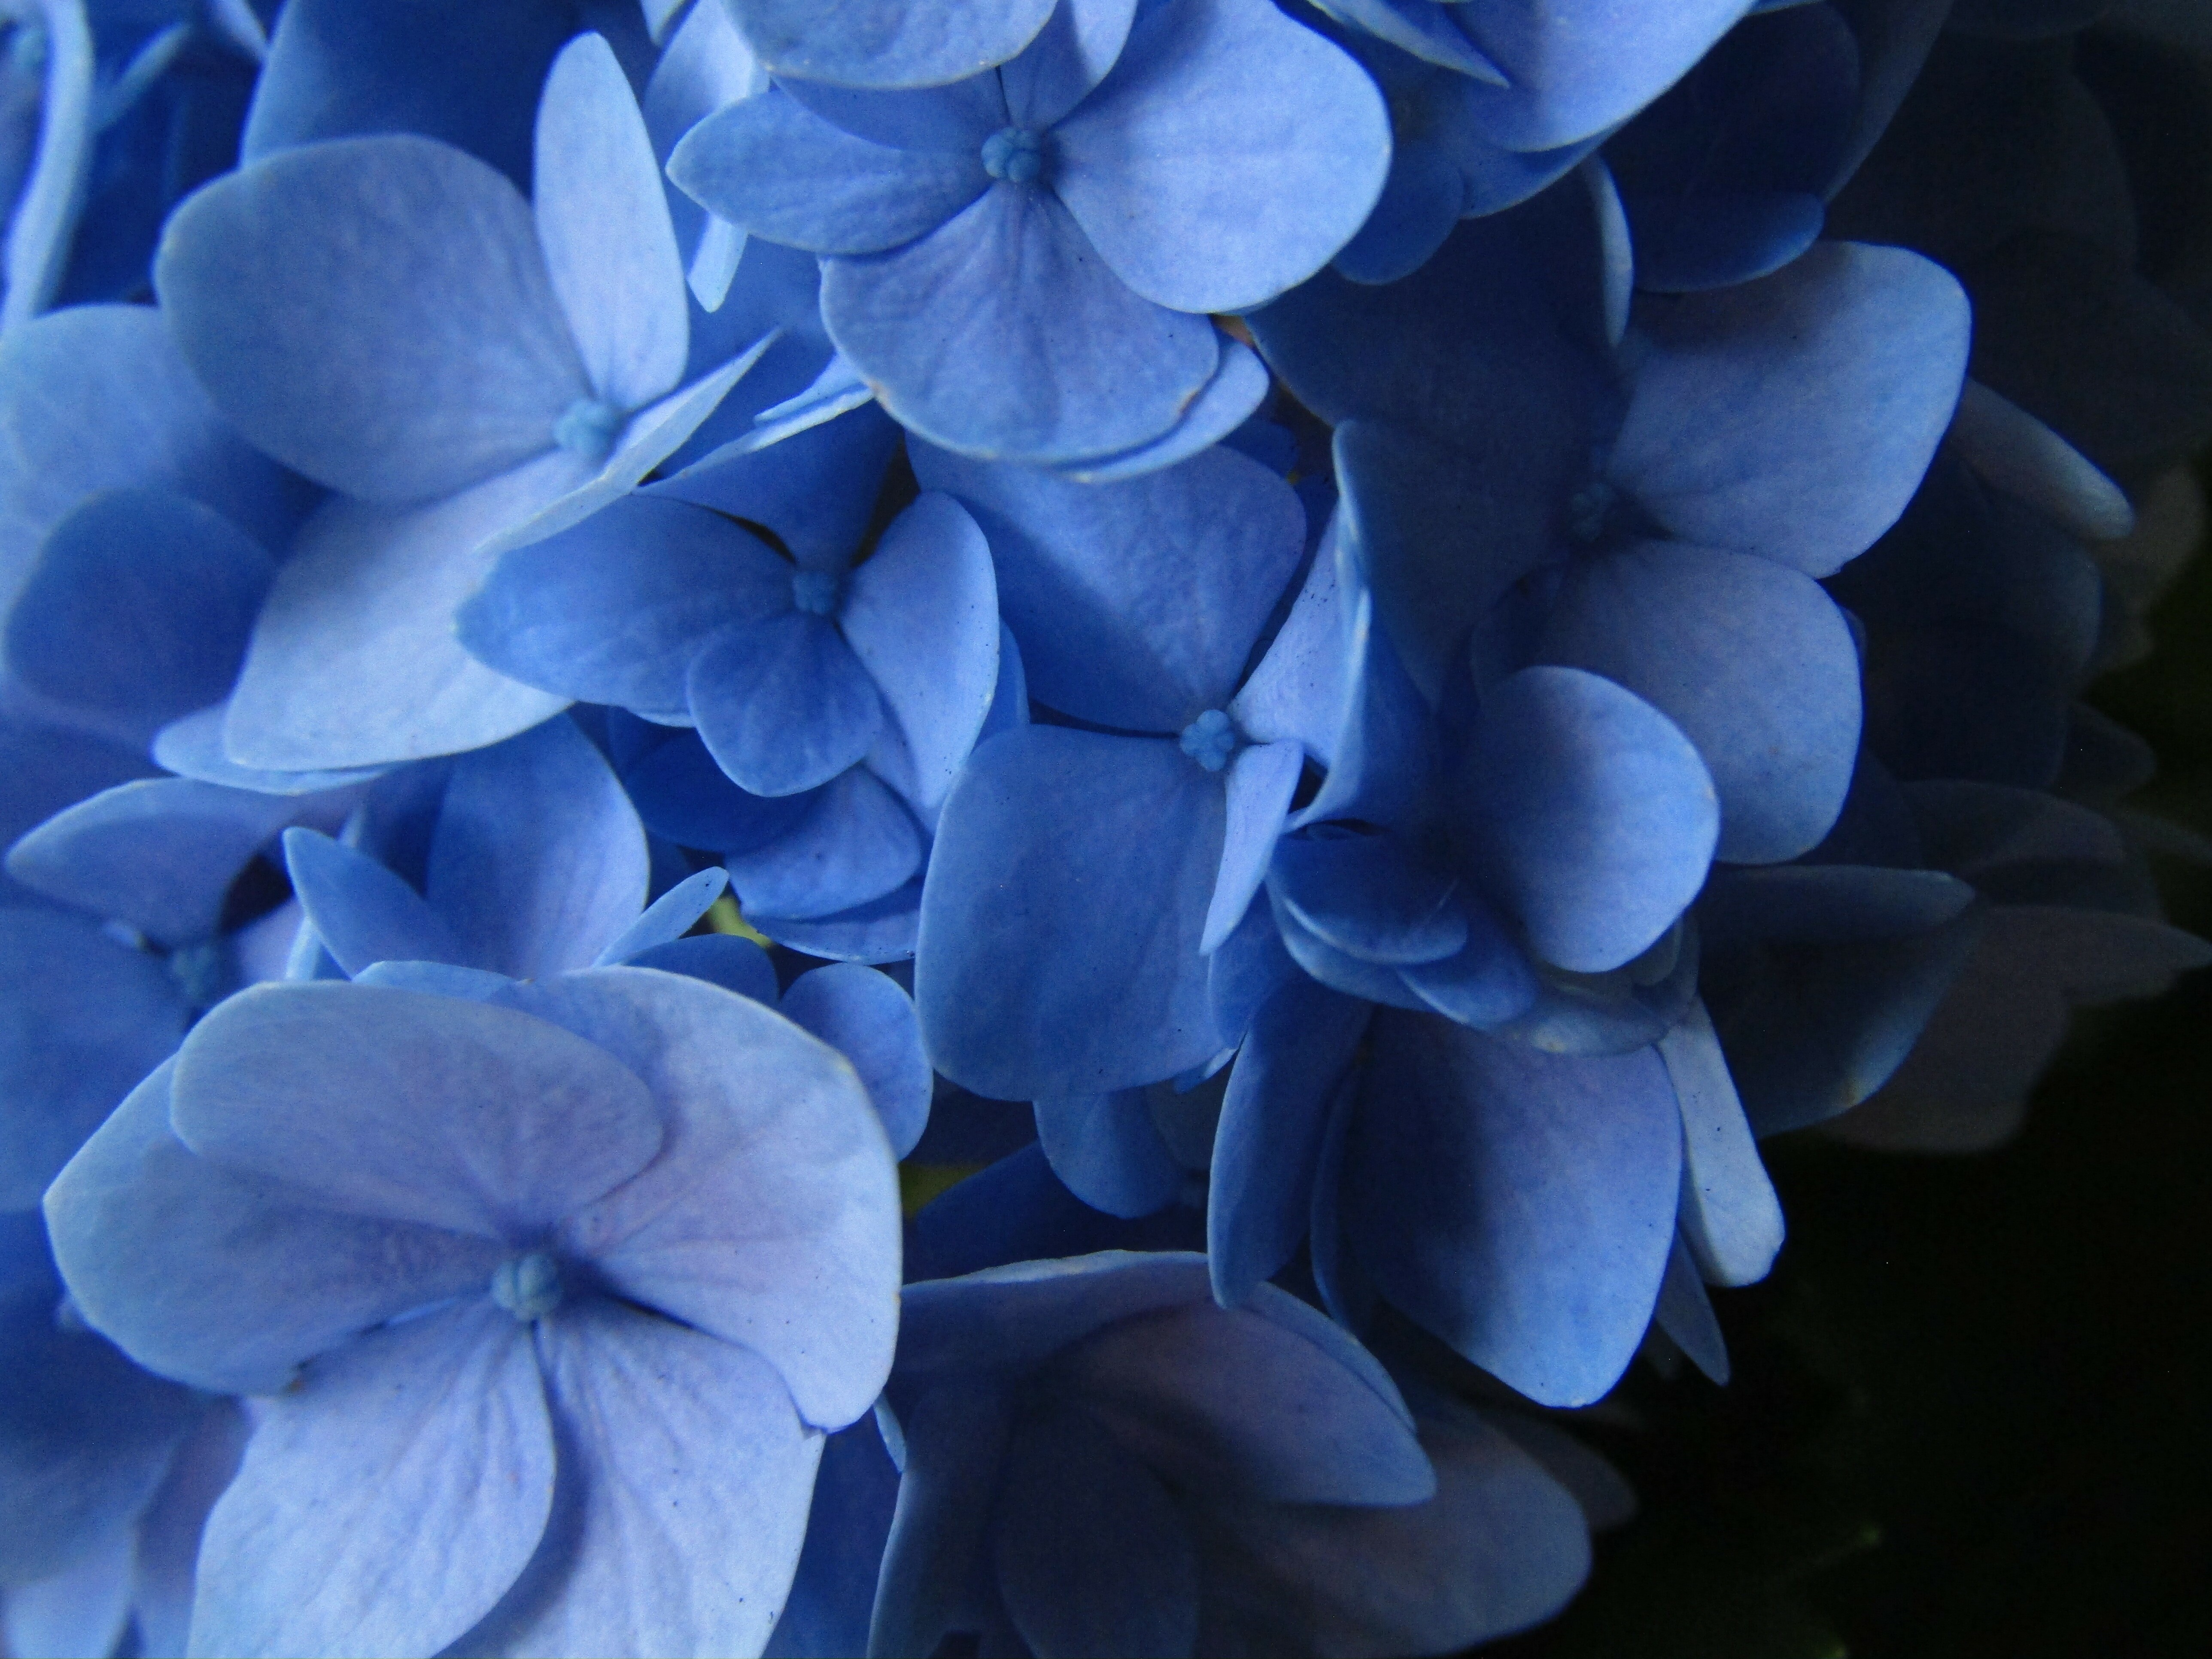 Blue flower hydrangea closeup macro by Demasc1